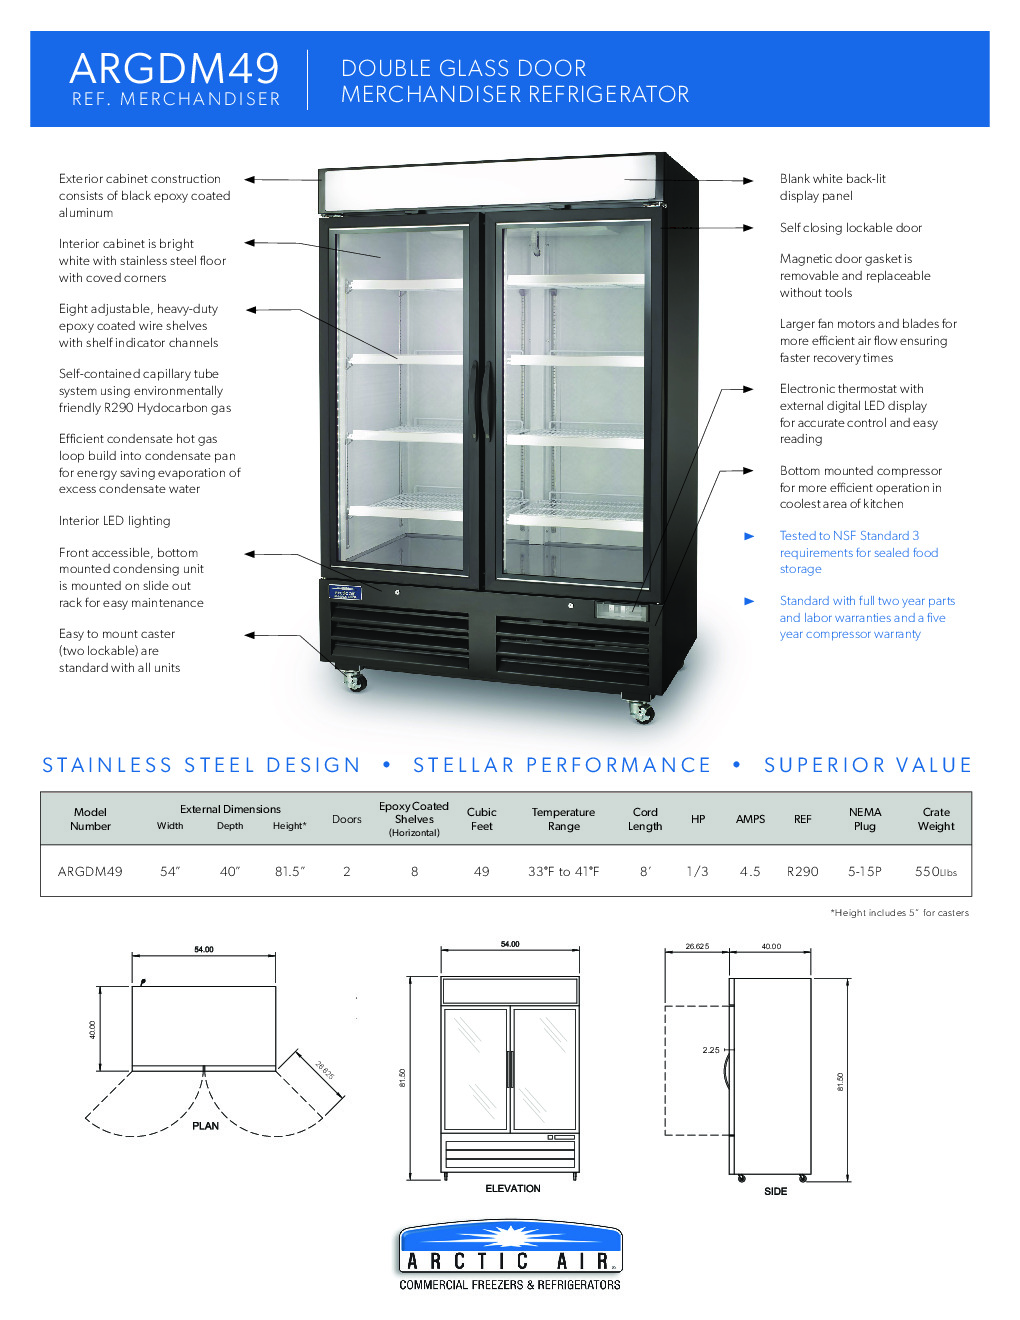 Arctic Air ARGDM49 Merchandiser Refrigerator